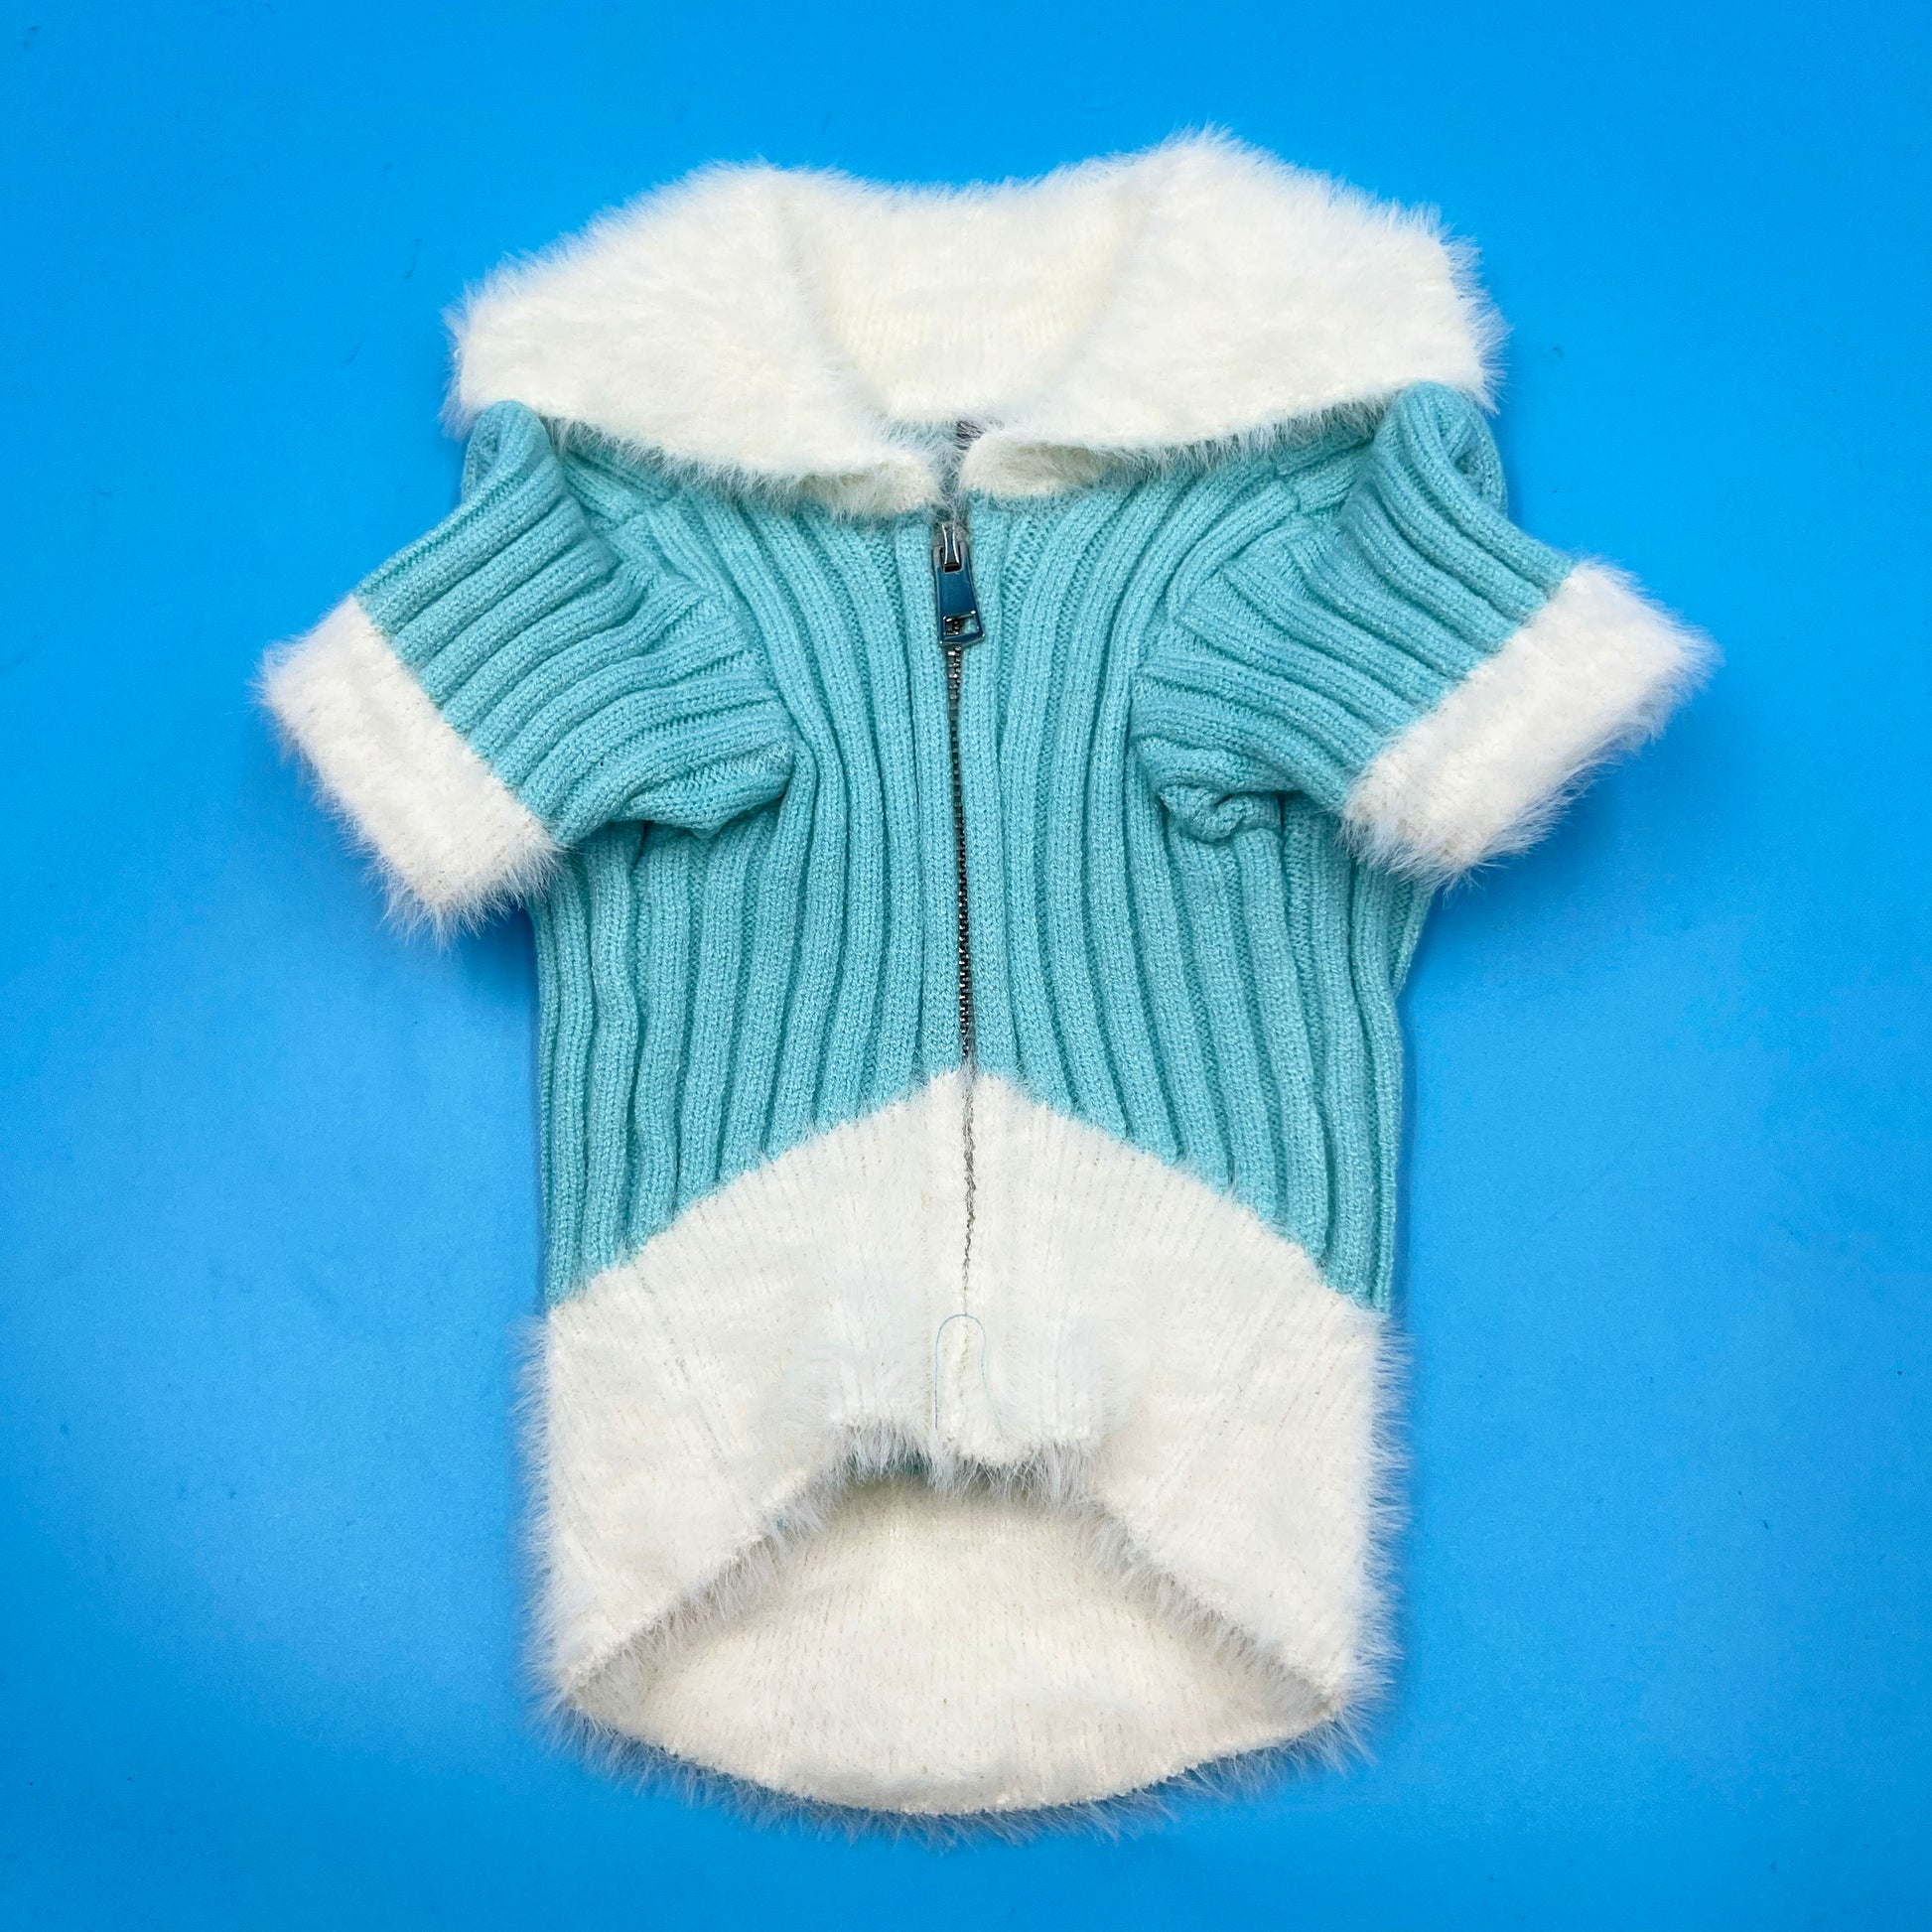 Fluffy Winter Sweater bearsupreme